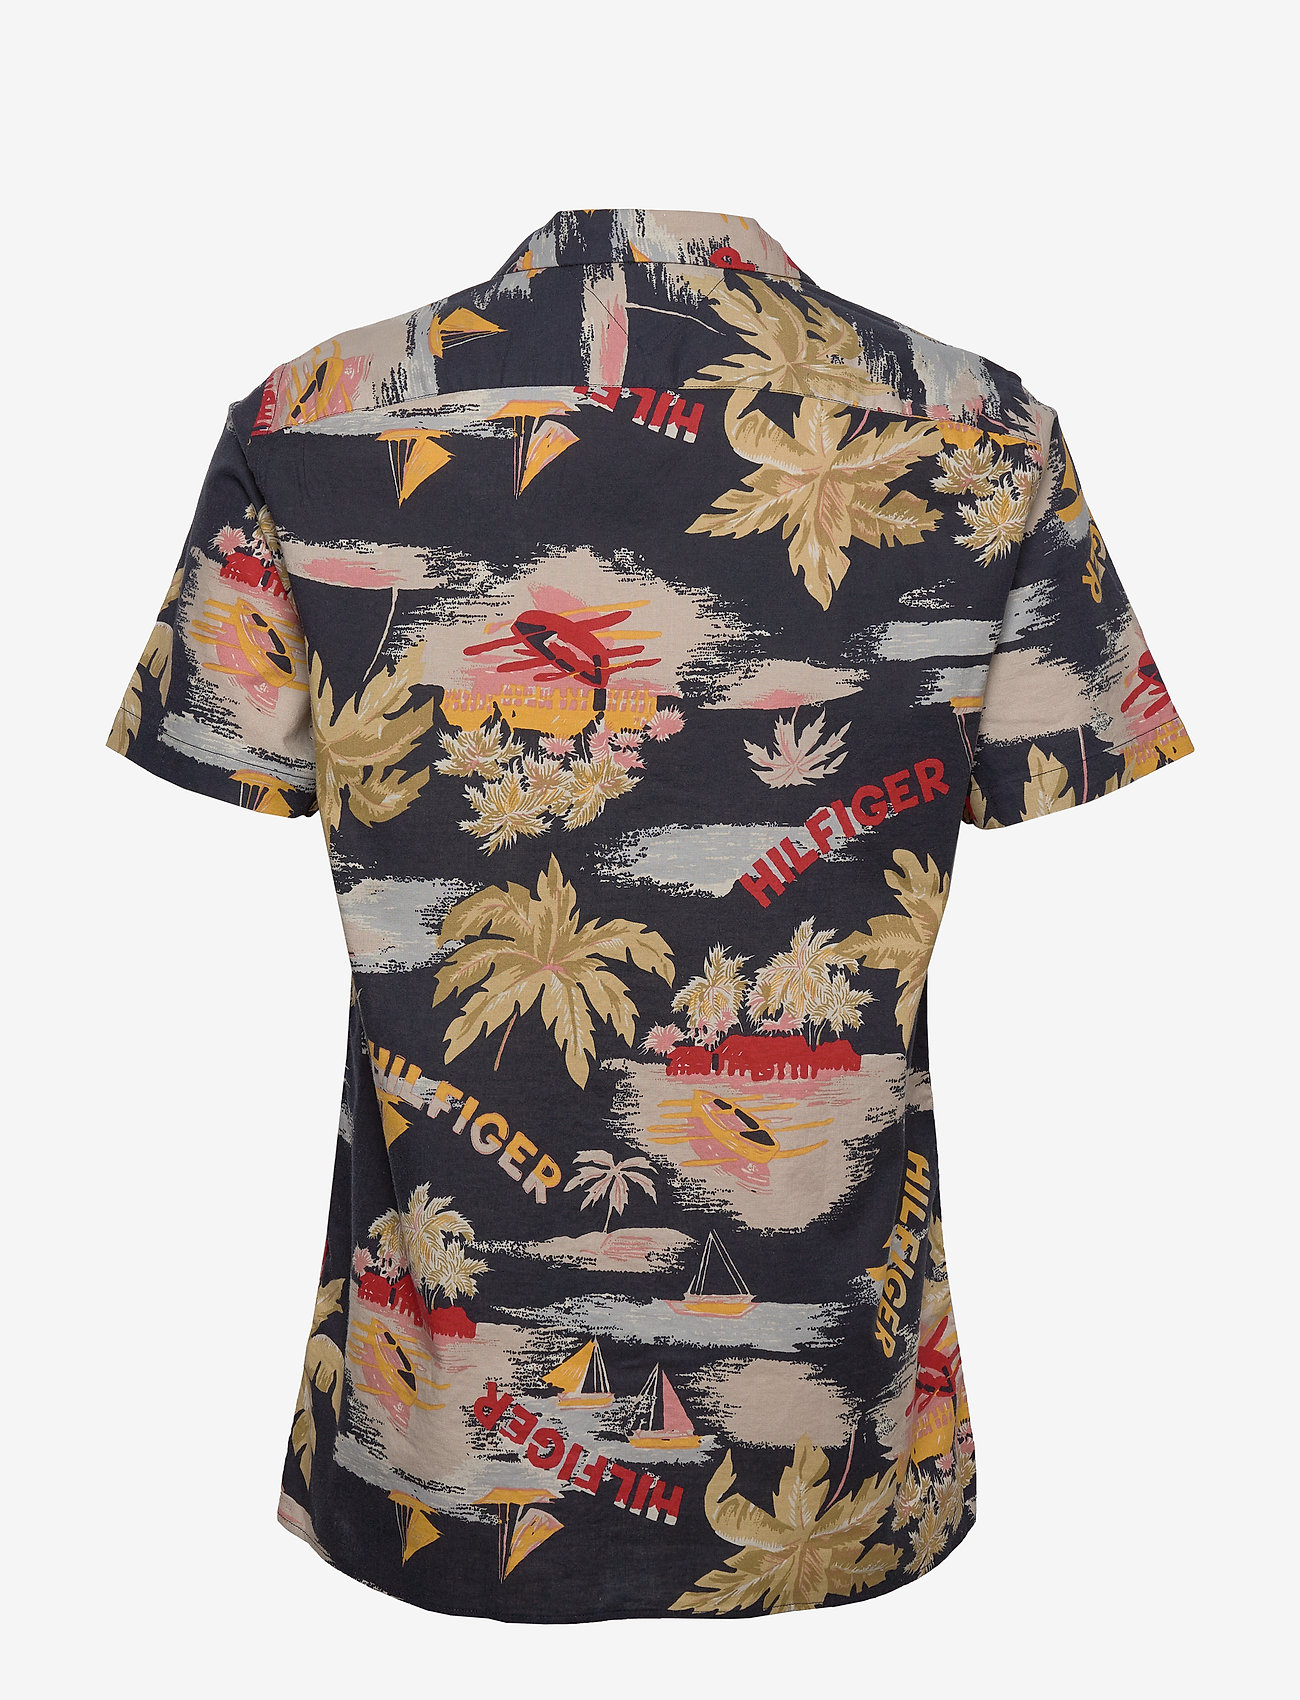 Tommy Hilfiger Hawaiian Print Shirt S/s 